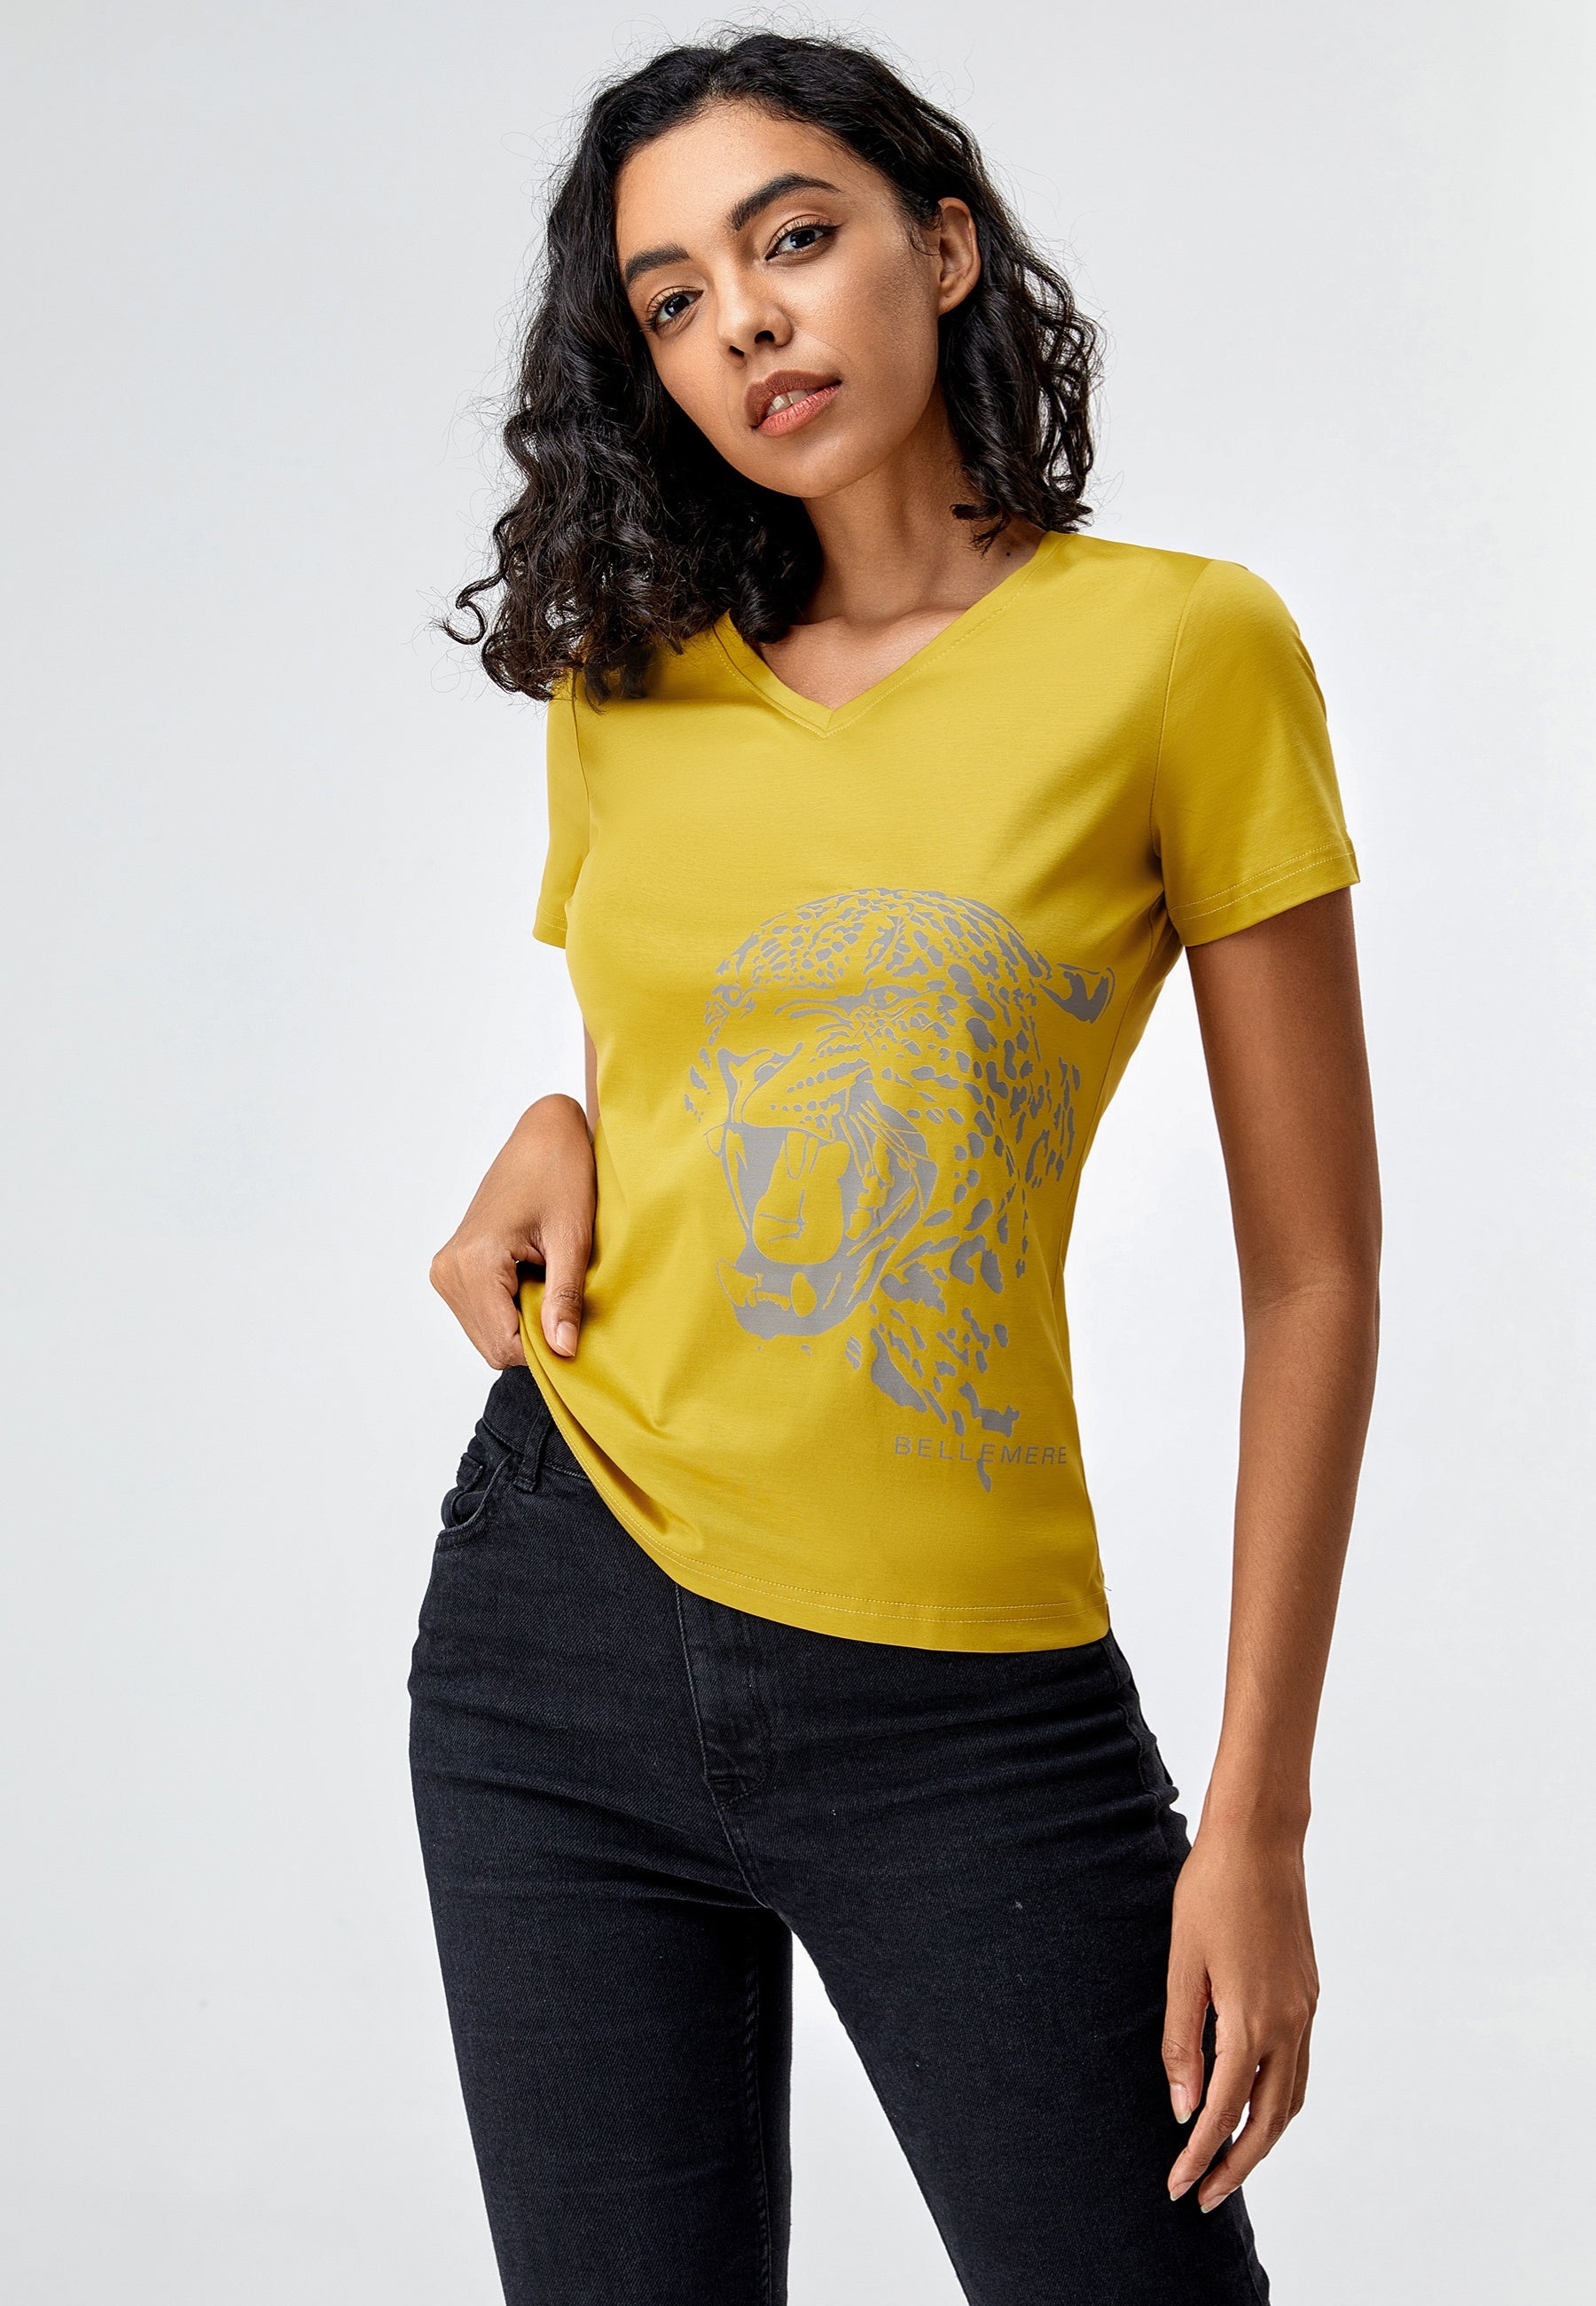 Women’s Leopard Graphic Print T-Shirt (Leopard animal T-shirt, limited edition)